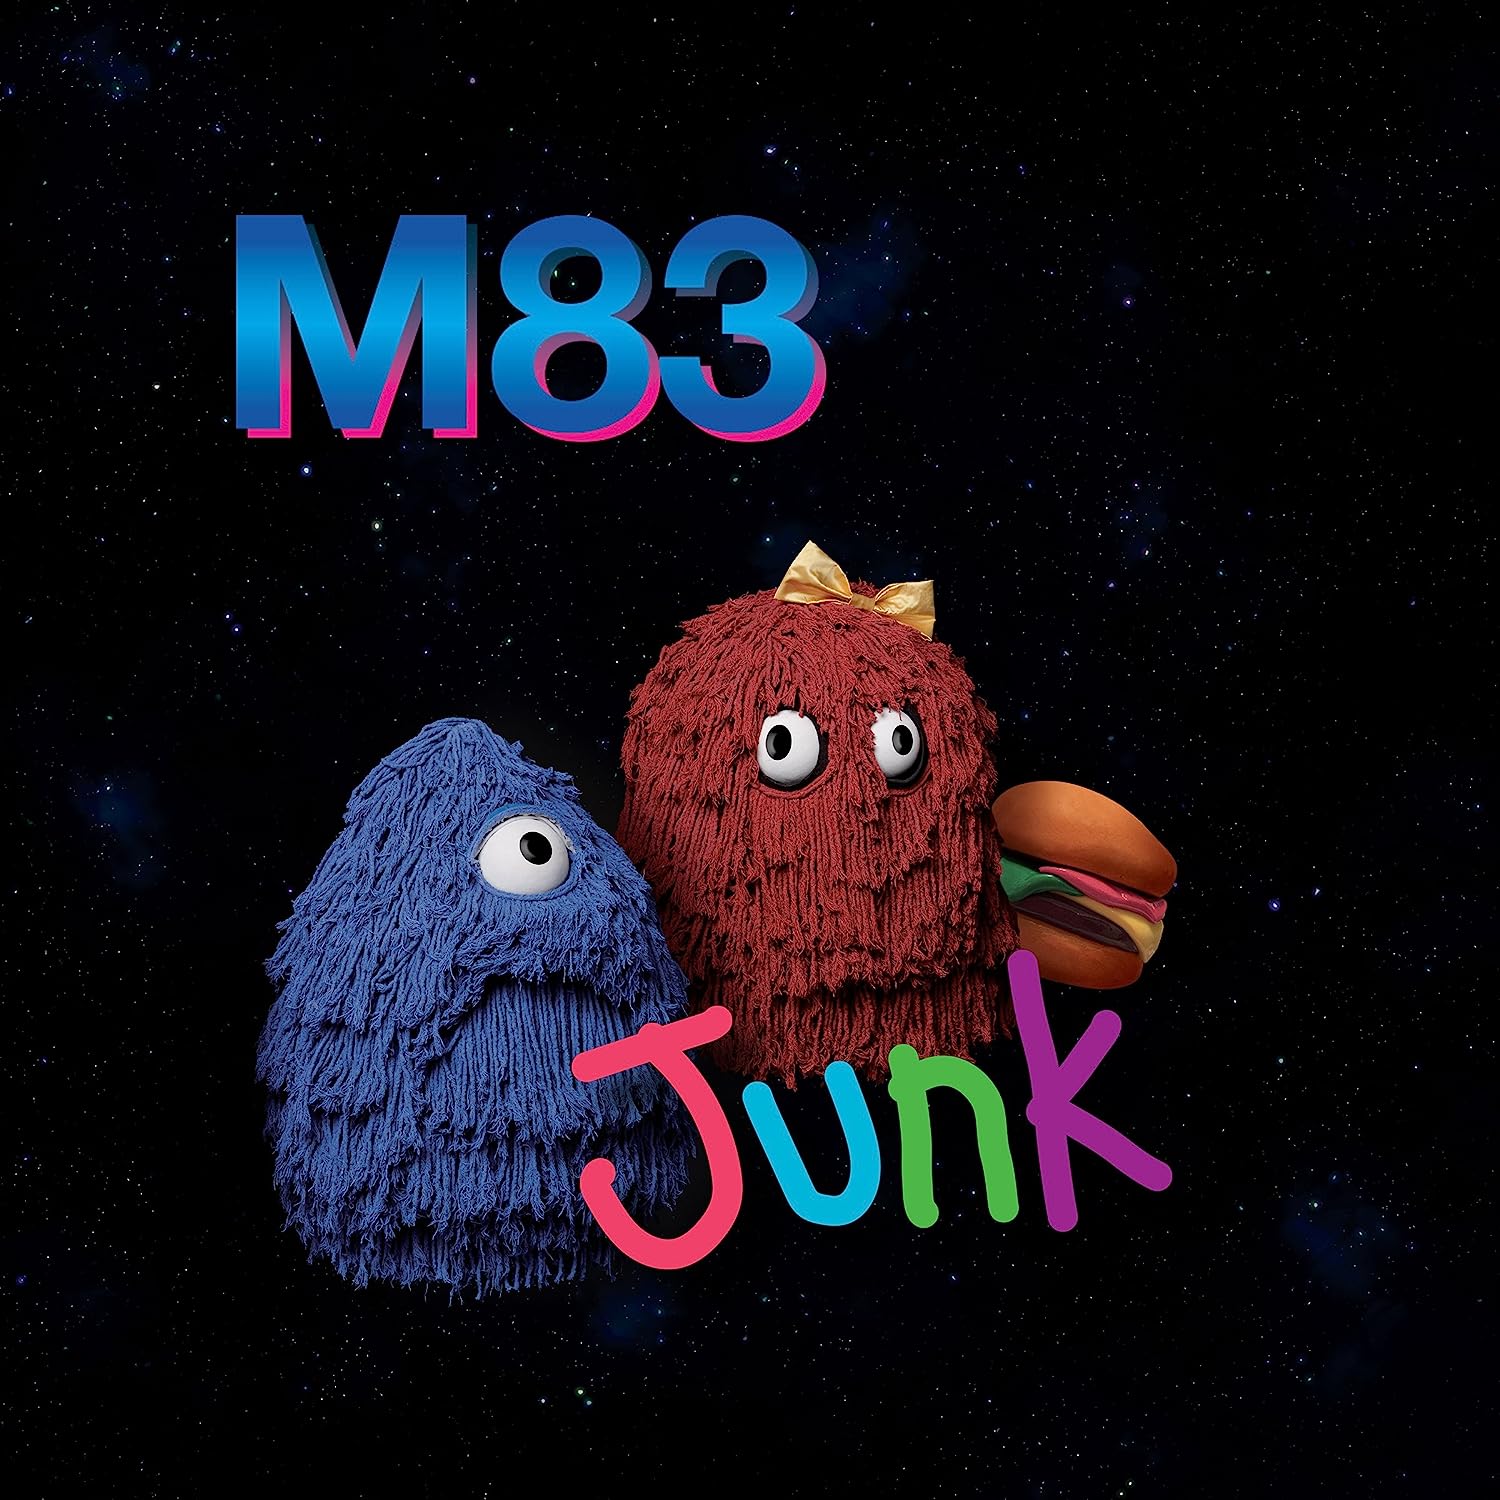 Junk | M83 | Steve Vai | stevevai.it